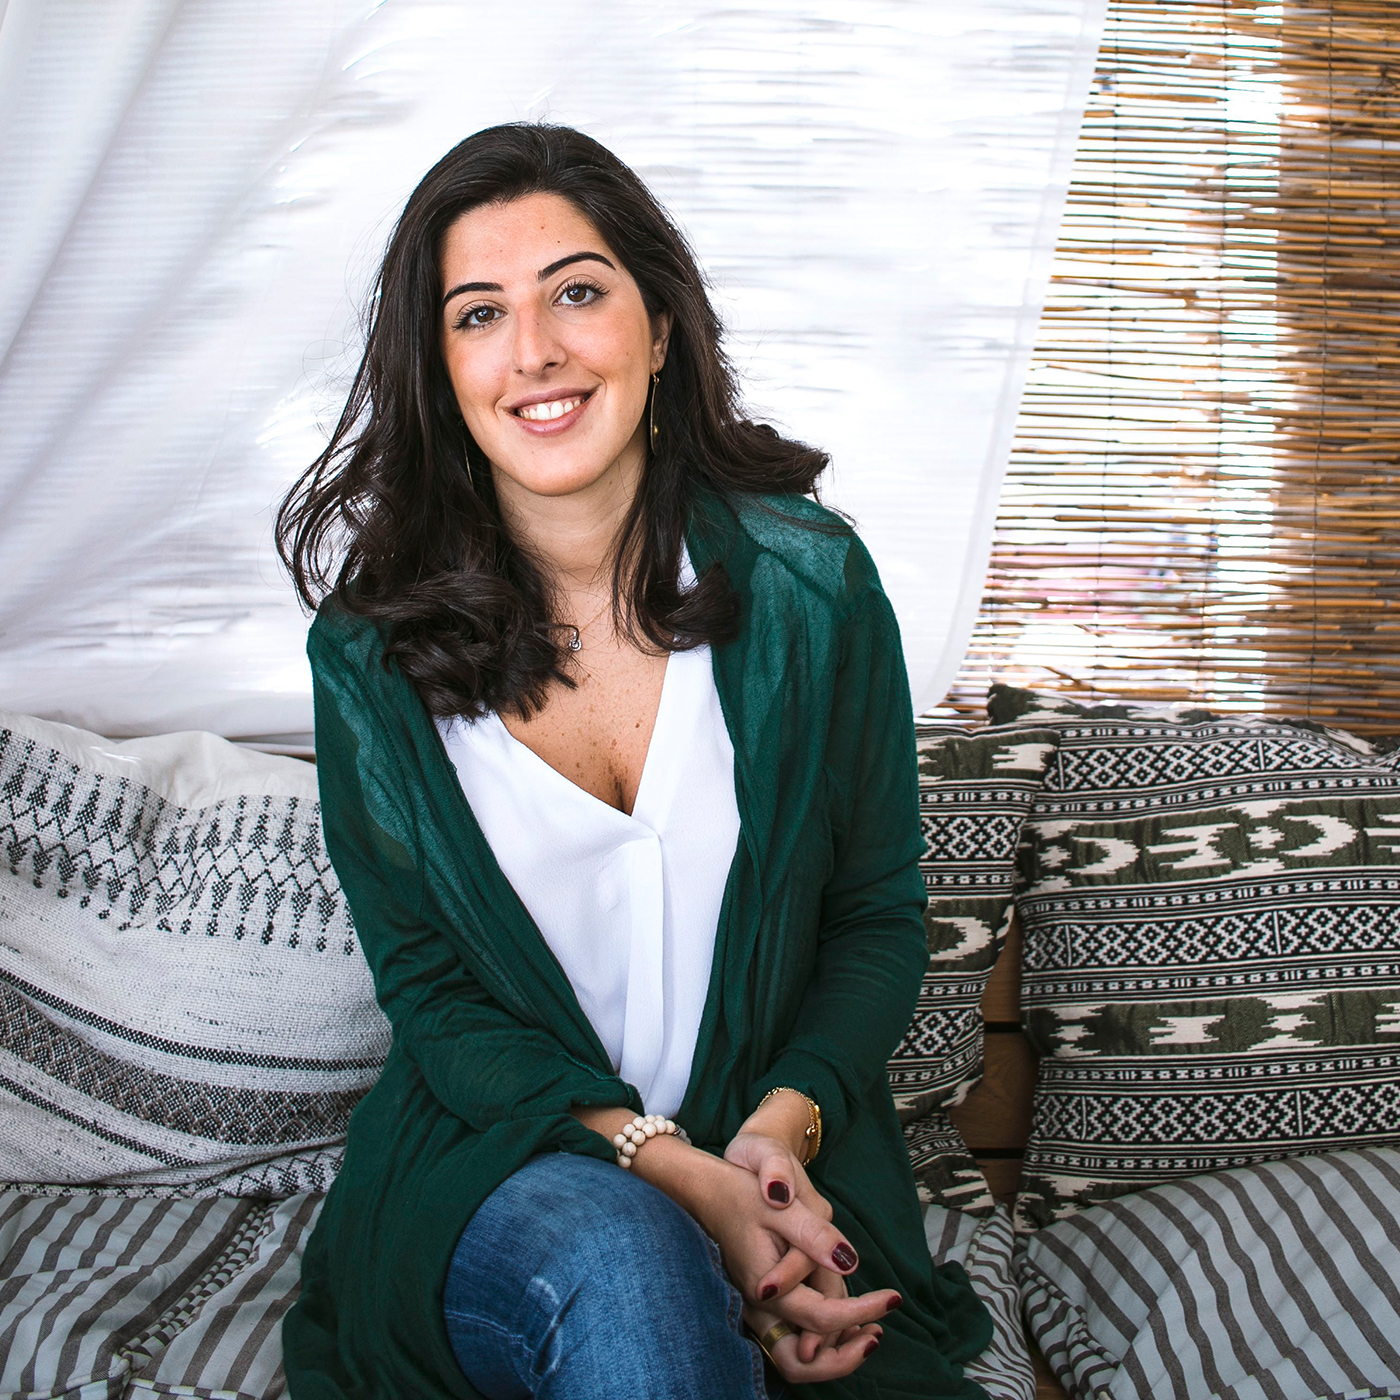 Maria Abi Hanna, Dubai-based dietitian and founder of Nutrition Untold